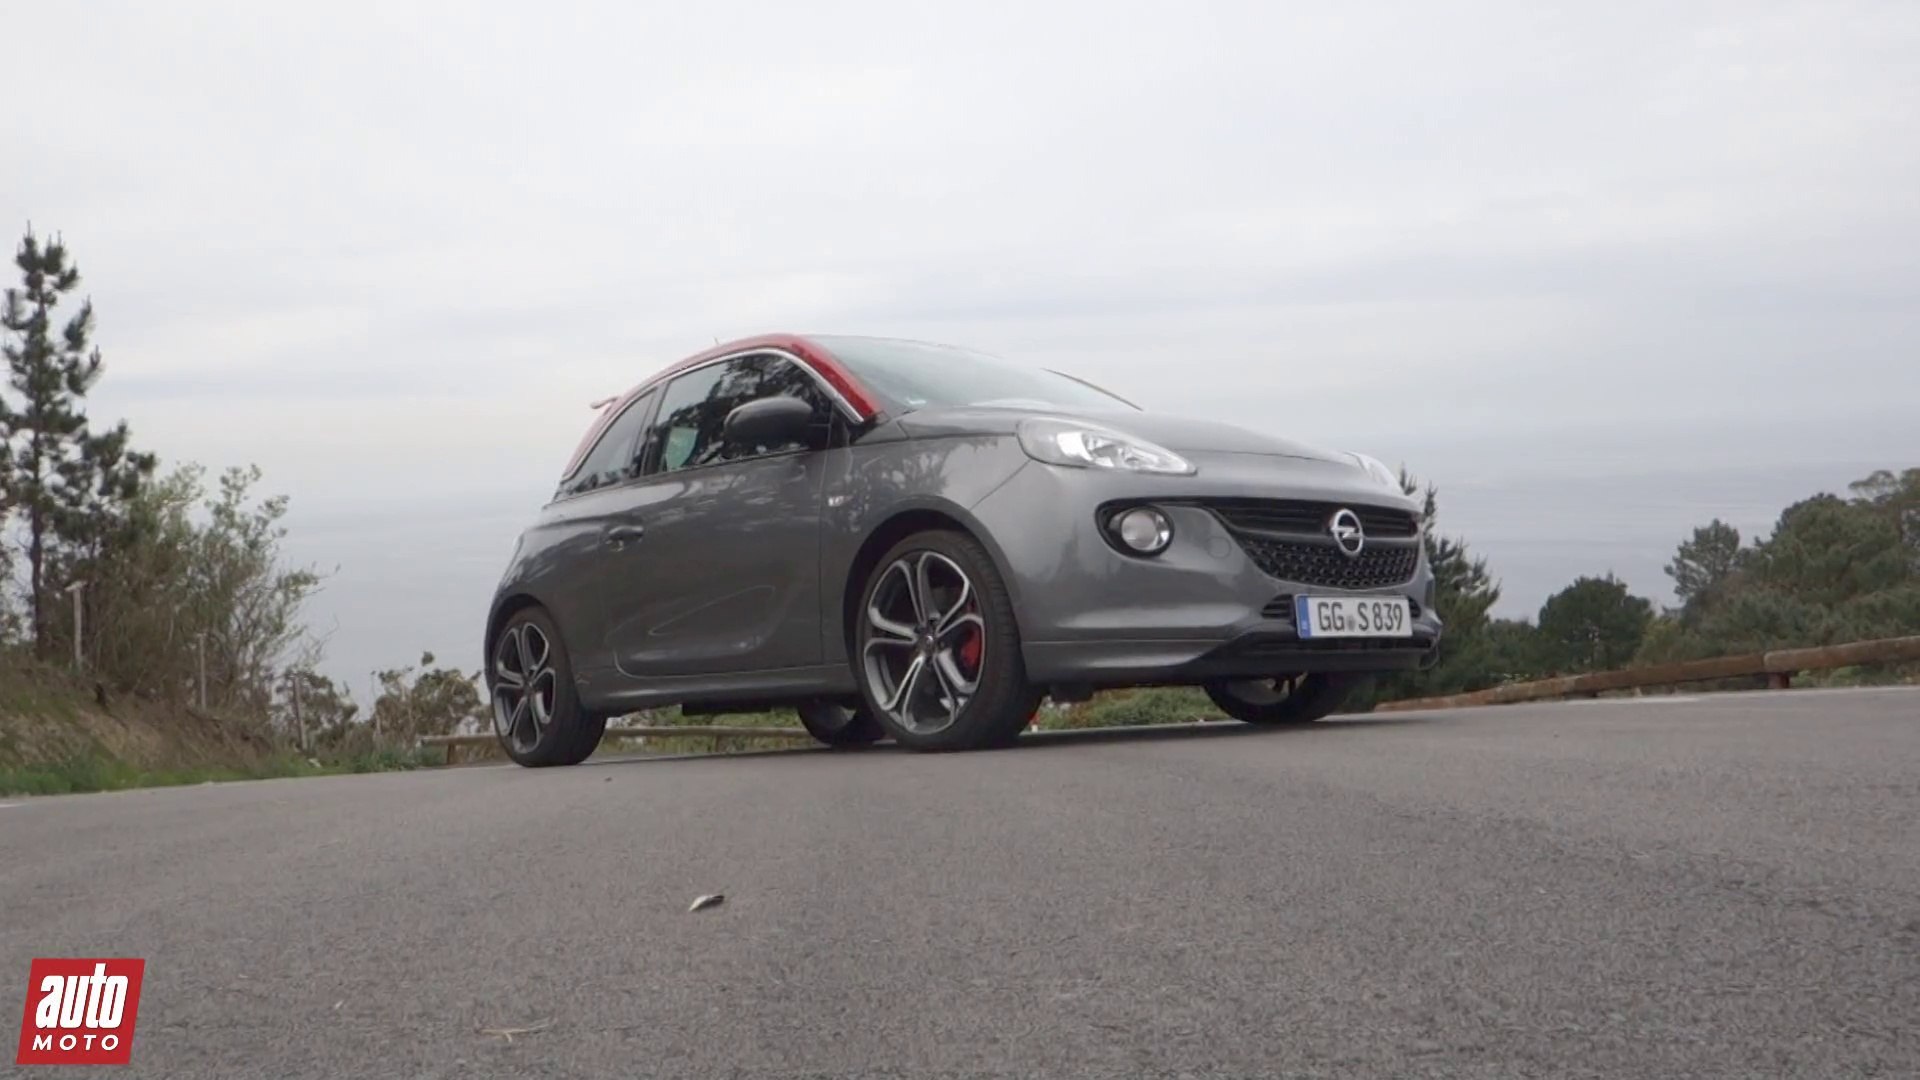 2015 Opel Adam S 1.4 turbo 150 ch : Essai AutoMoto - Vidéo Dailymotion